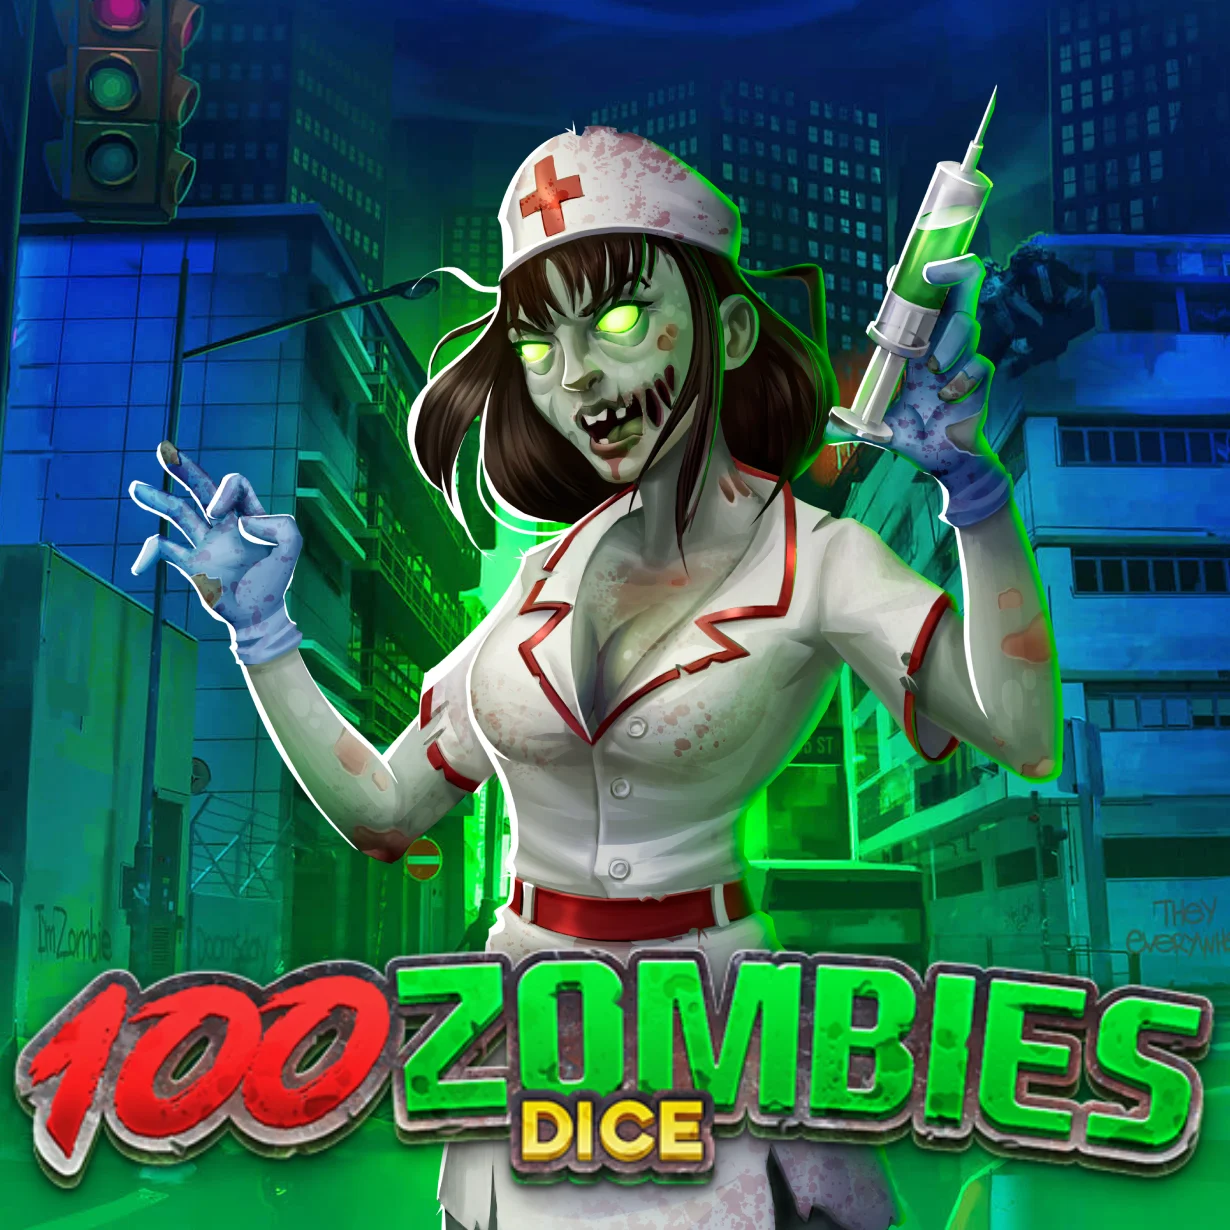 Play 100 Zombies Dice on Starcasinodice.be online casino